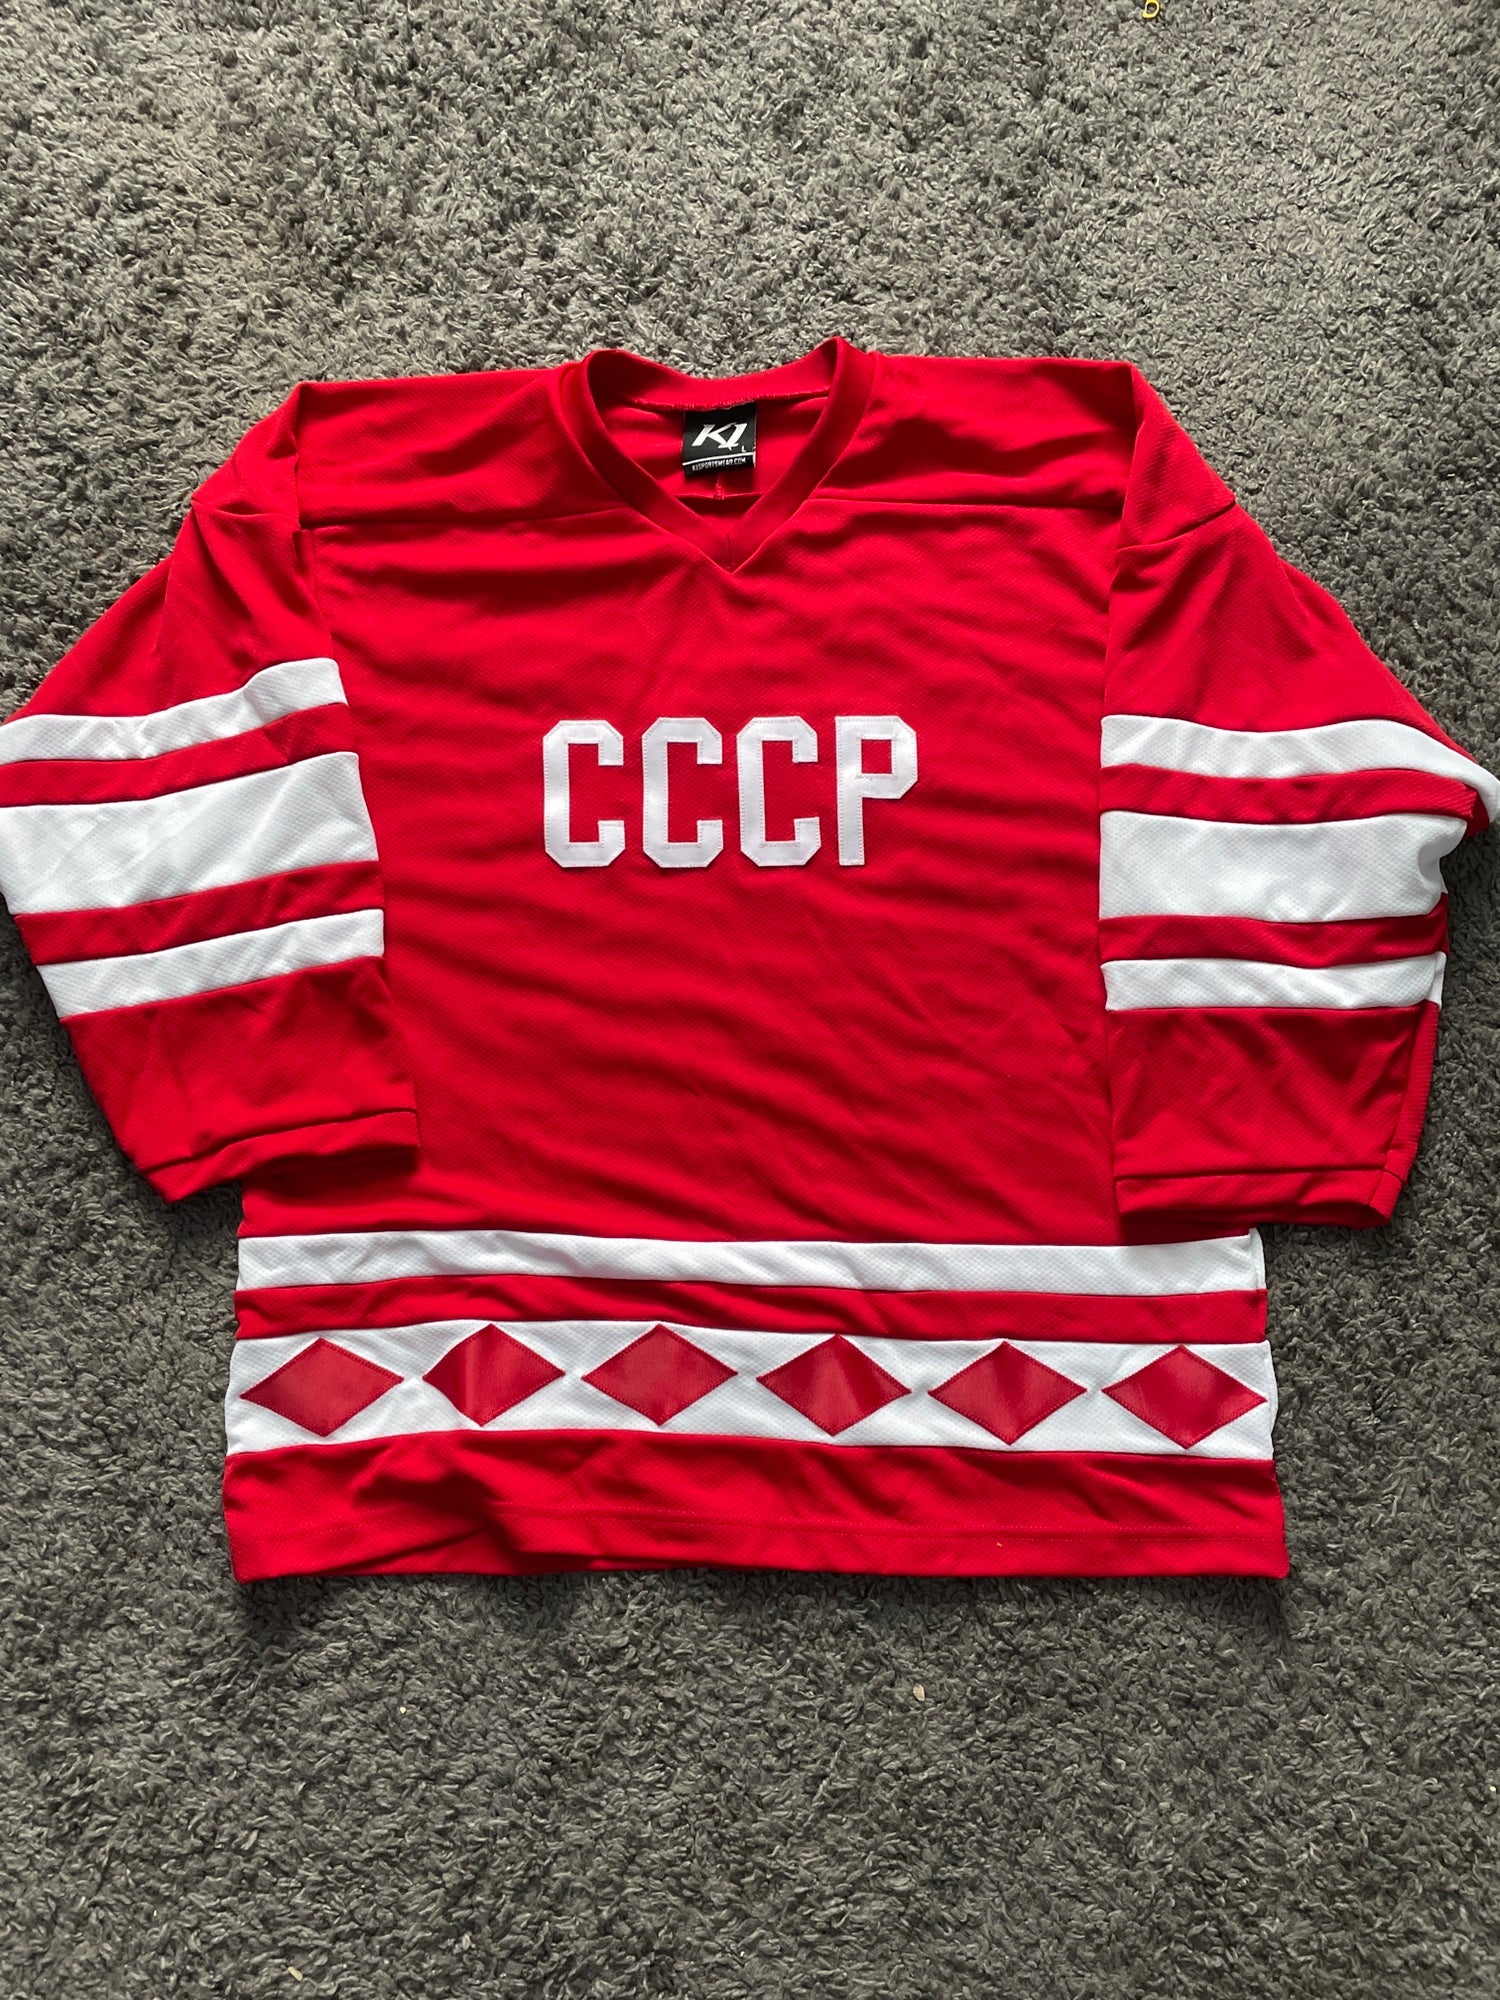 Lowsport CCCP Russian 1980 Winter Olympics Hockey Jersey Hoody XL